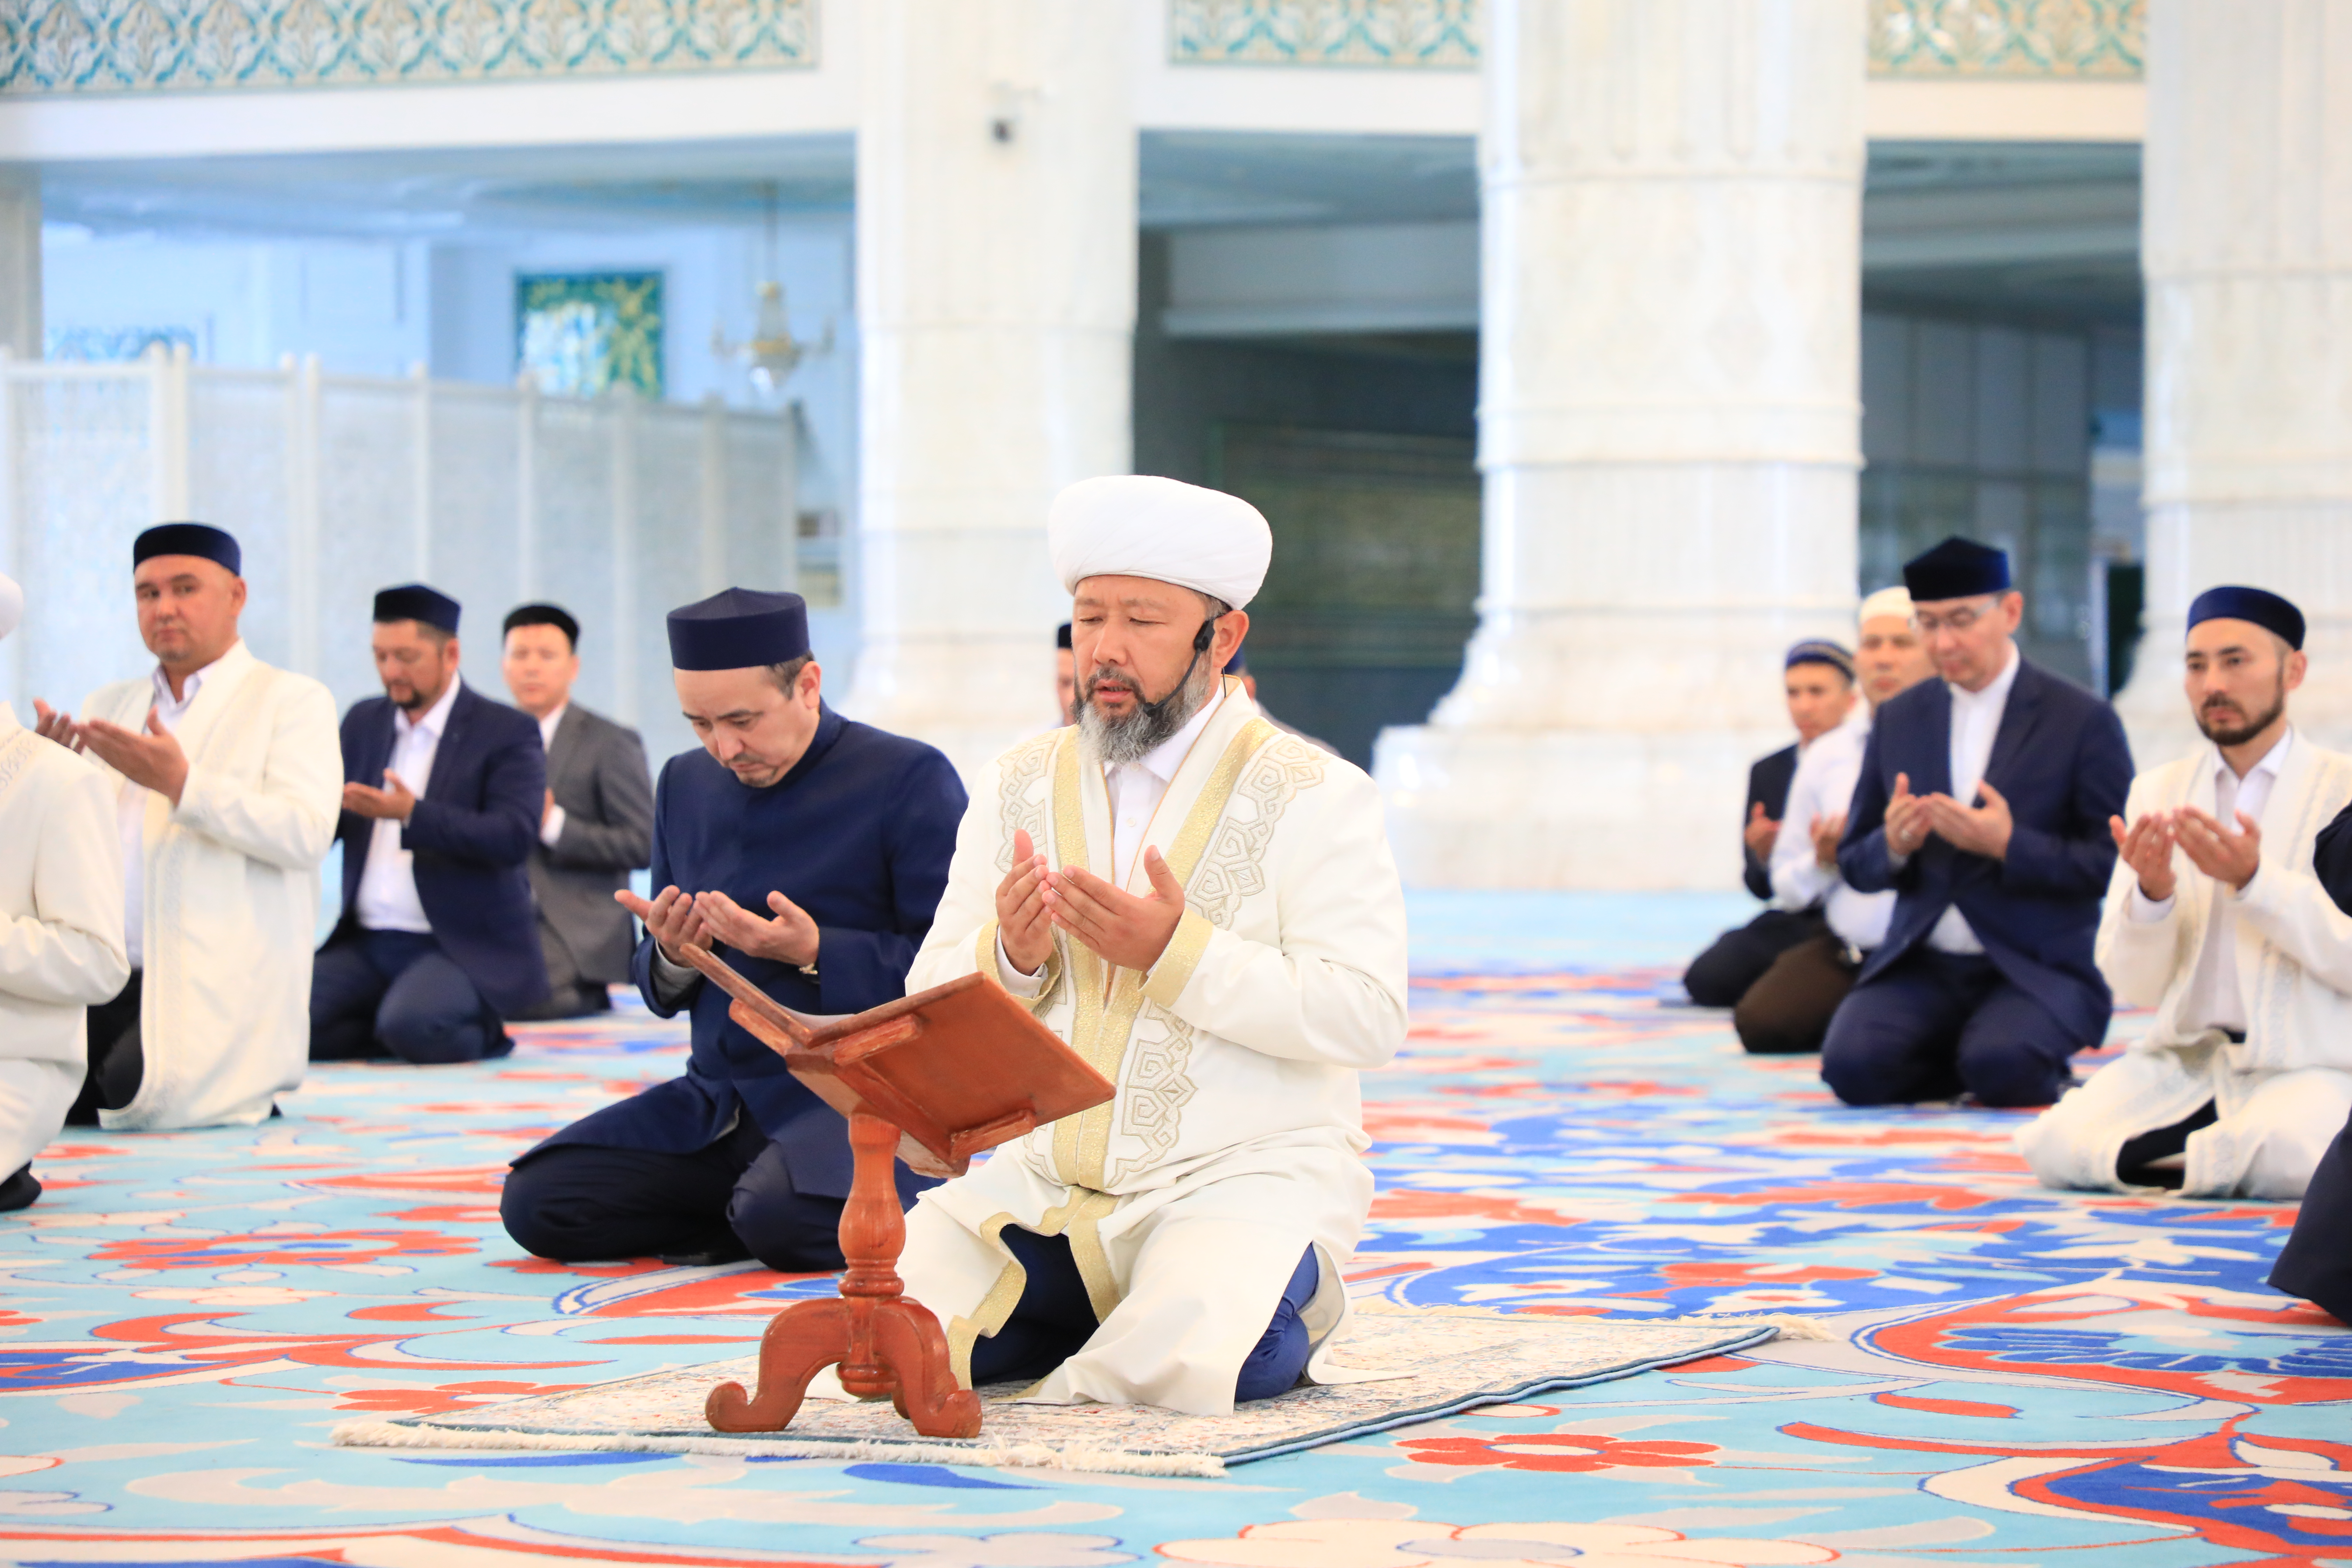 Мусульмане. Коран хатым. Фотосессия у мечети. Құран хатым